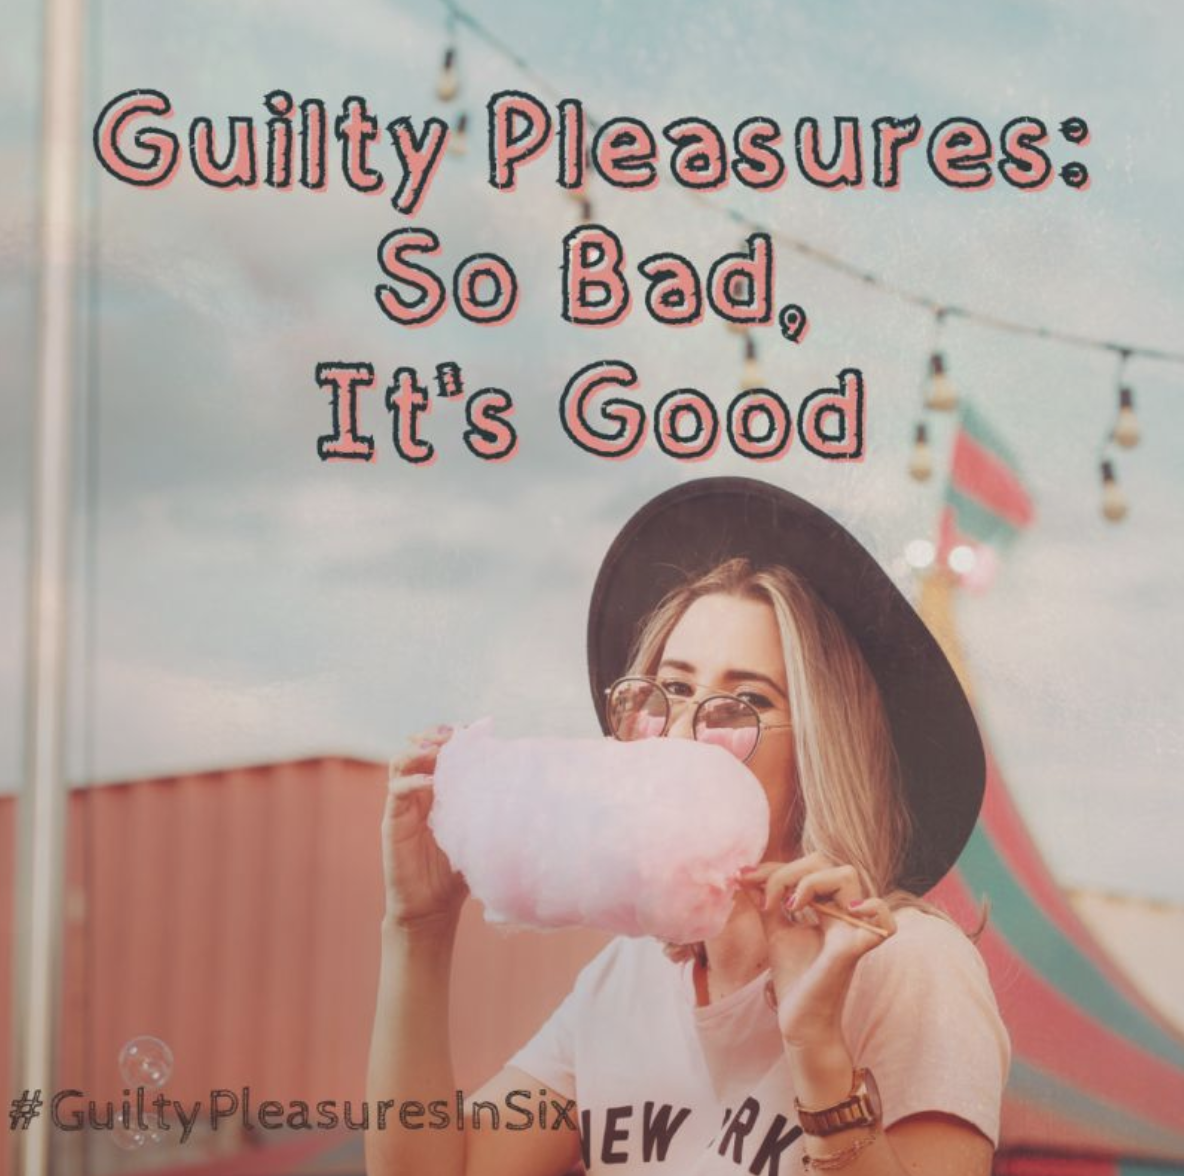 September 2021 - Guilty Pleasures 2